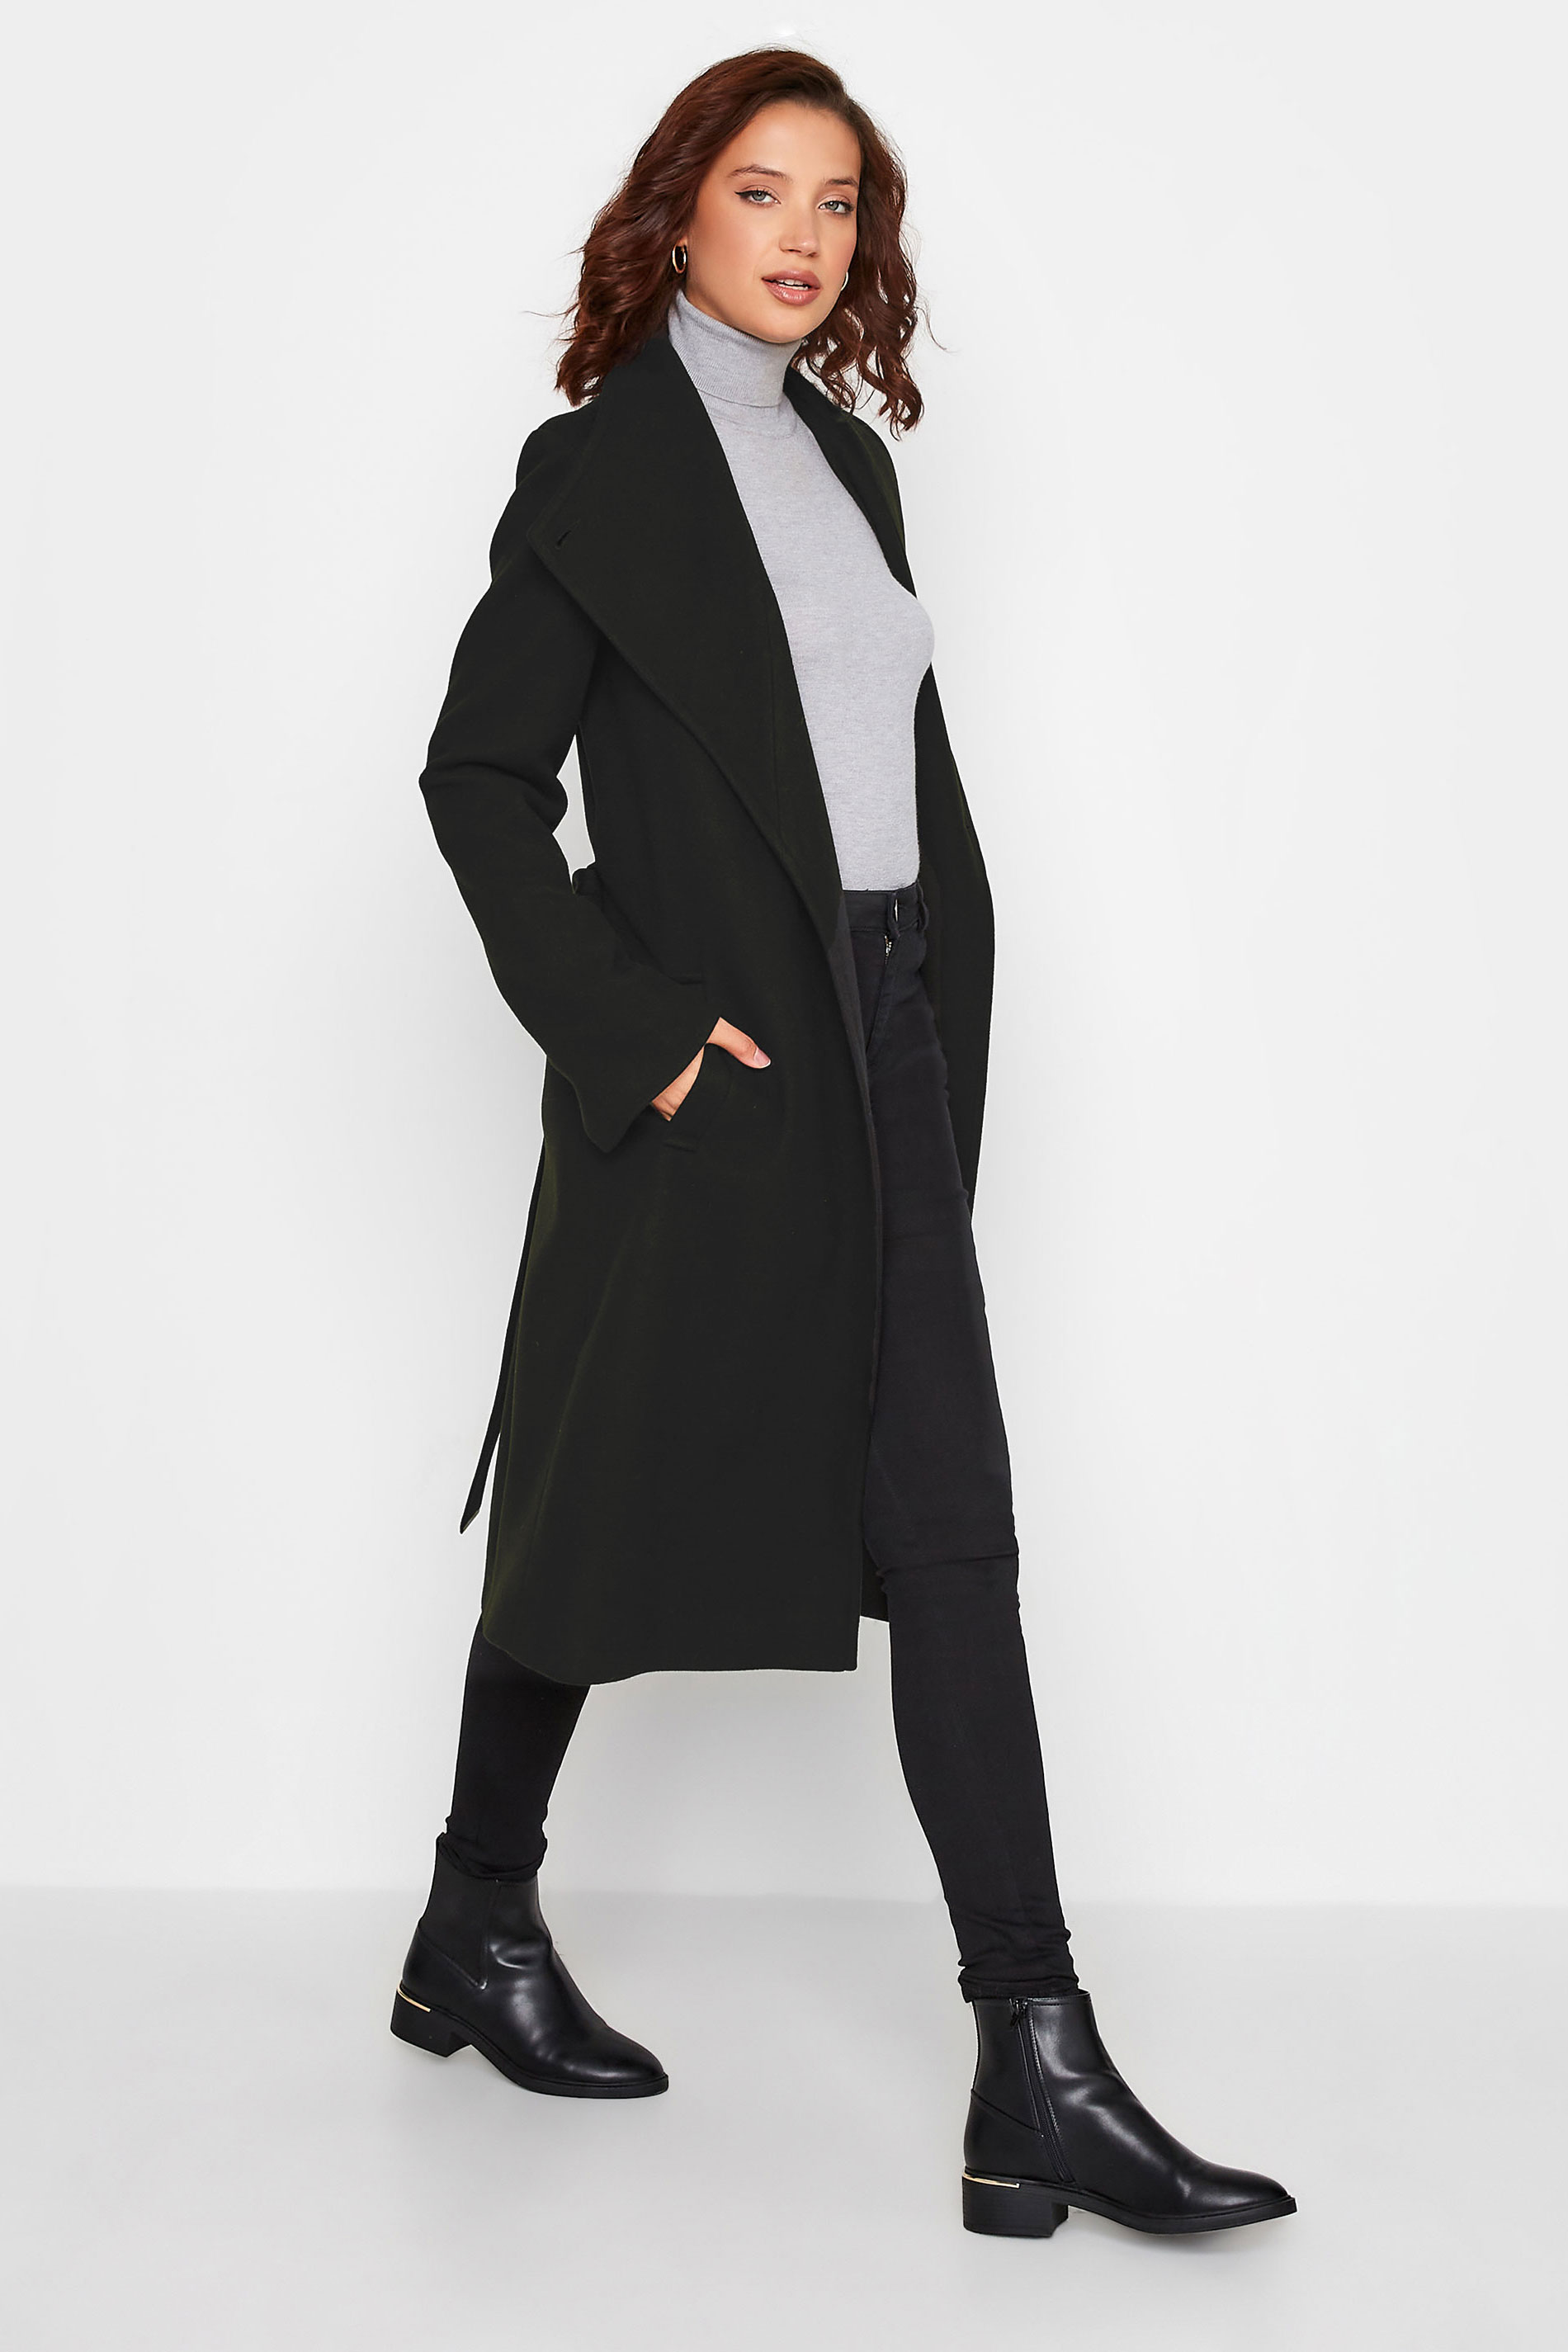 LTS Tall Women's Black Belted Coat | Long Tall Sally